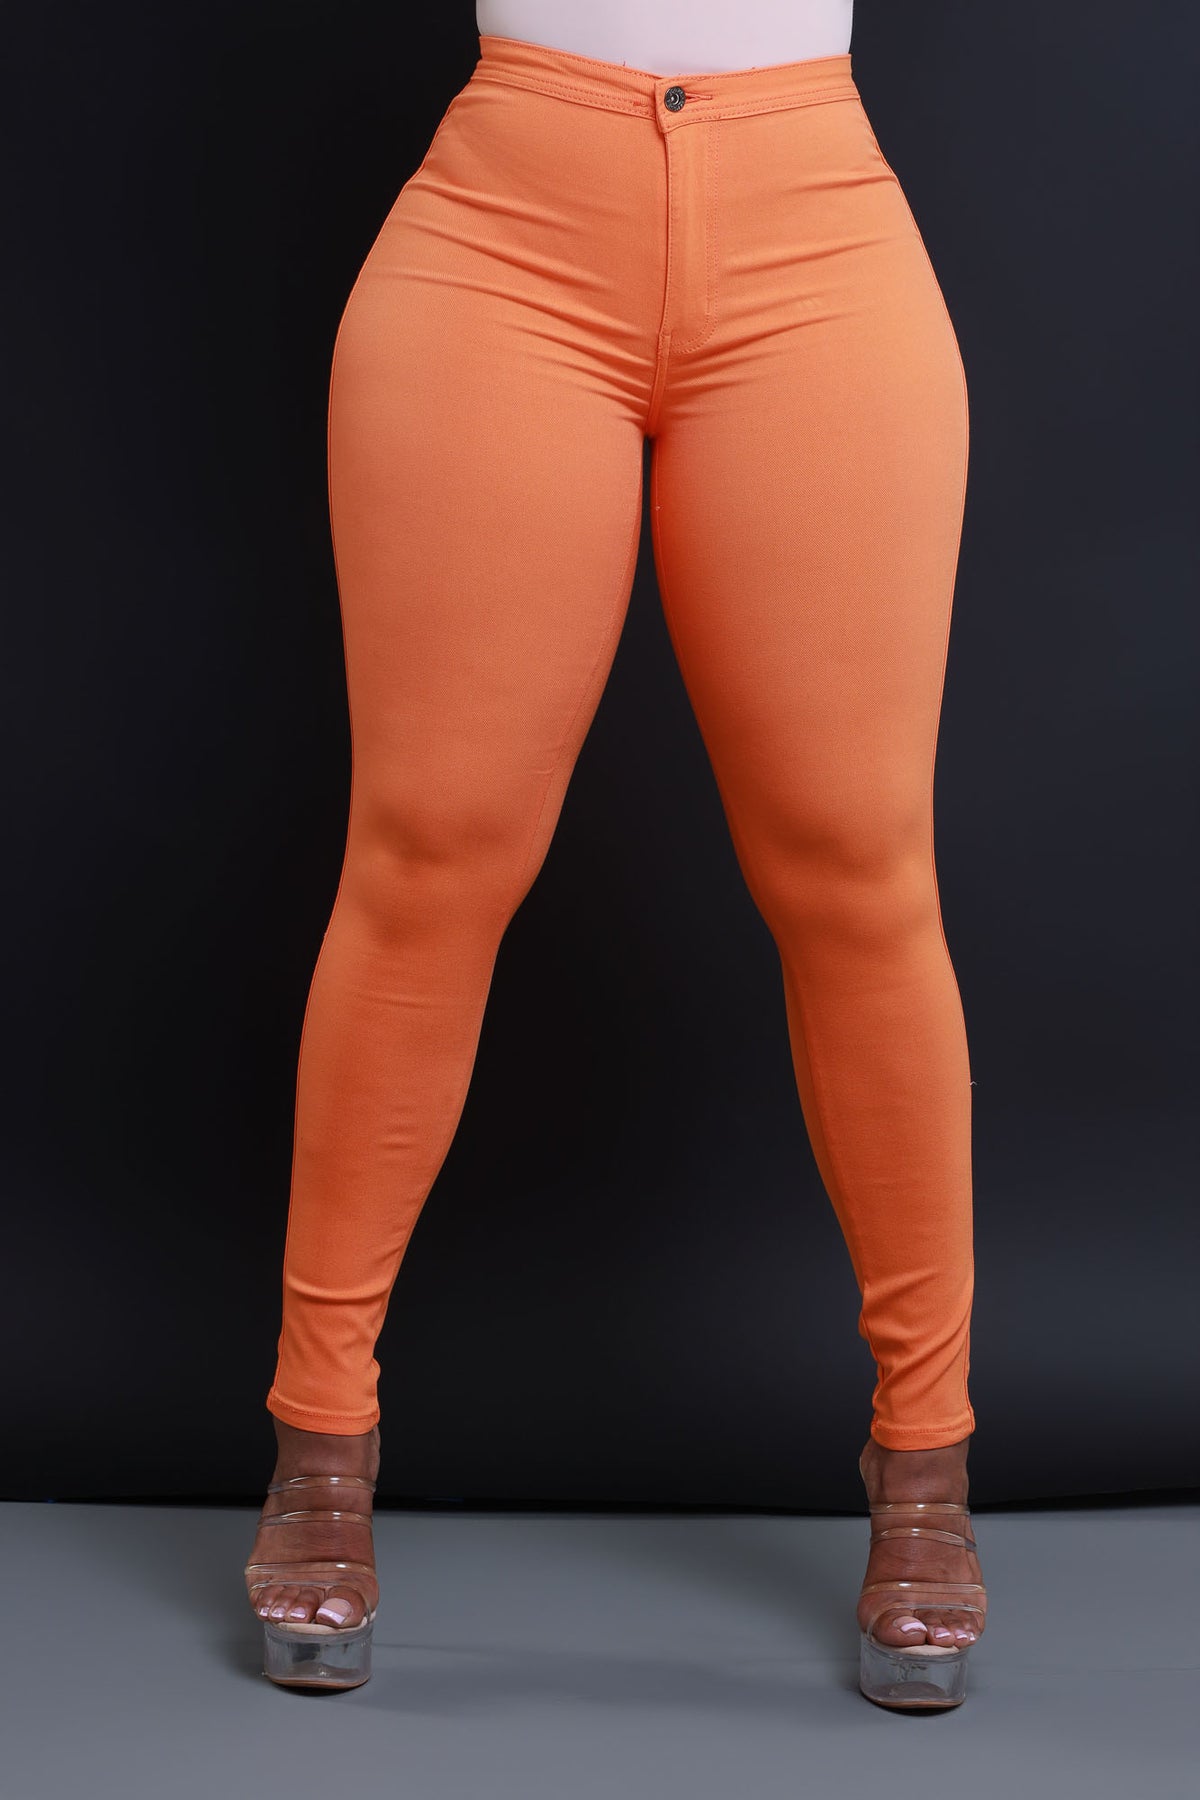 
              $15.99 Super Swank High Waist Stretchy Jeans - Orange - Swank A Posh
            